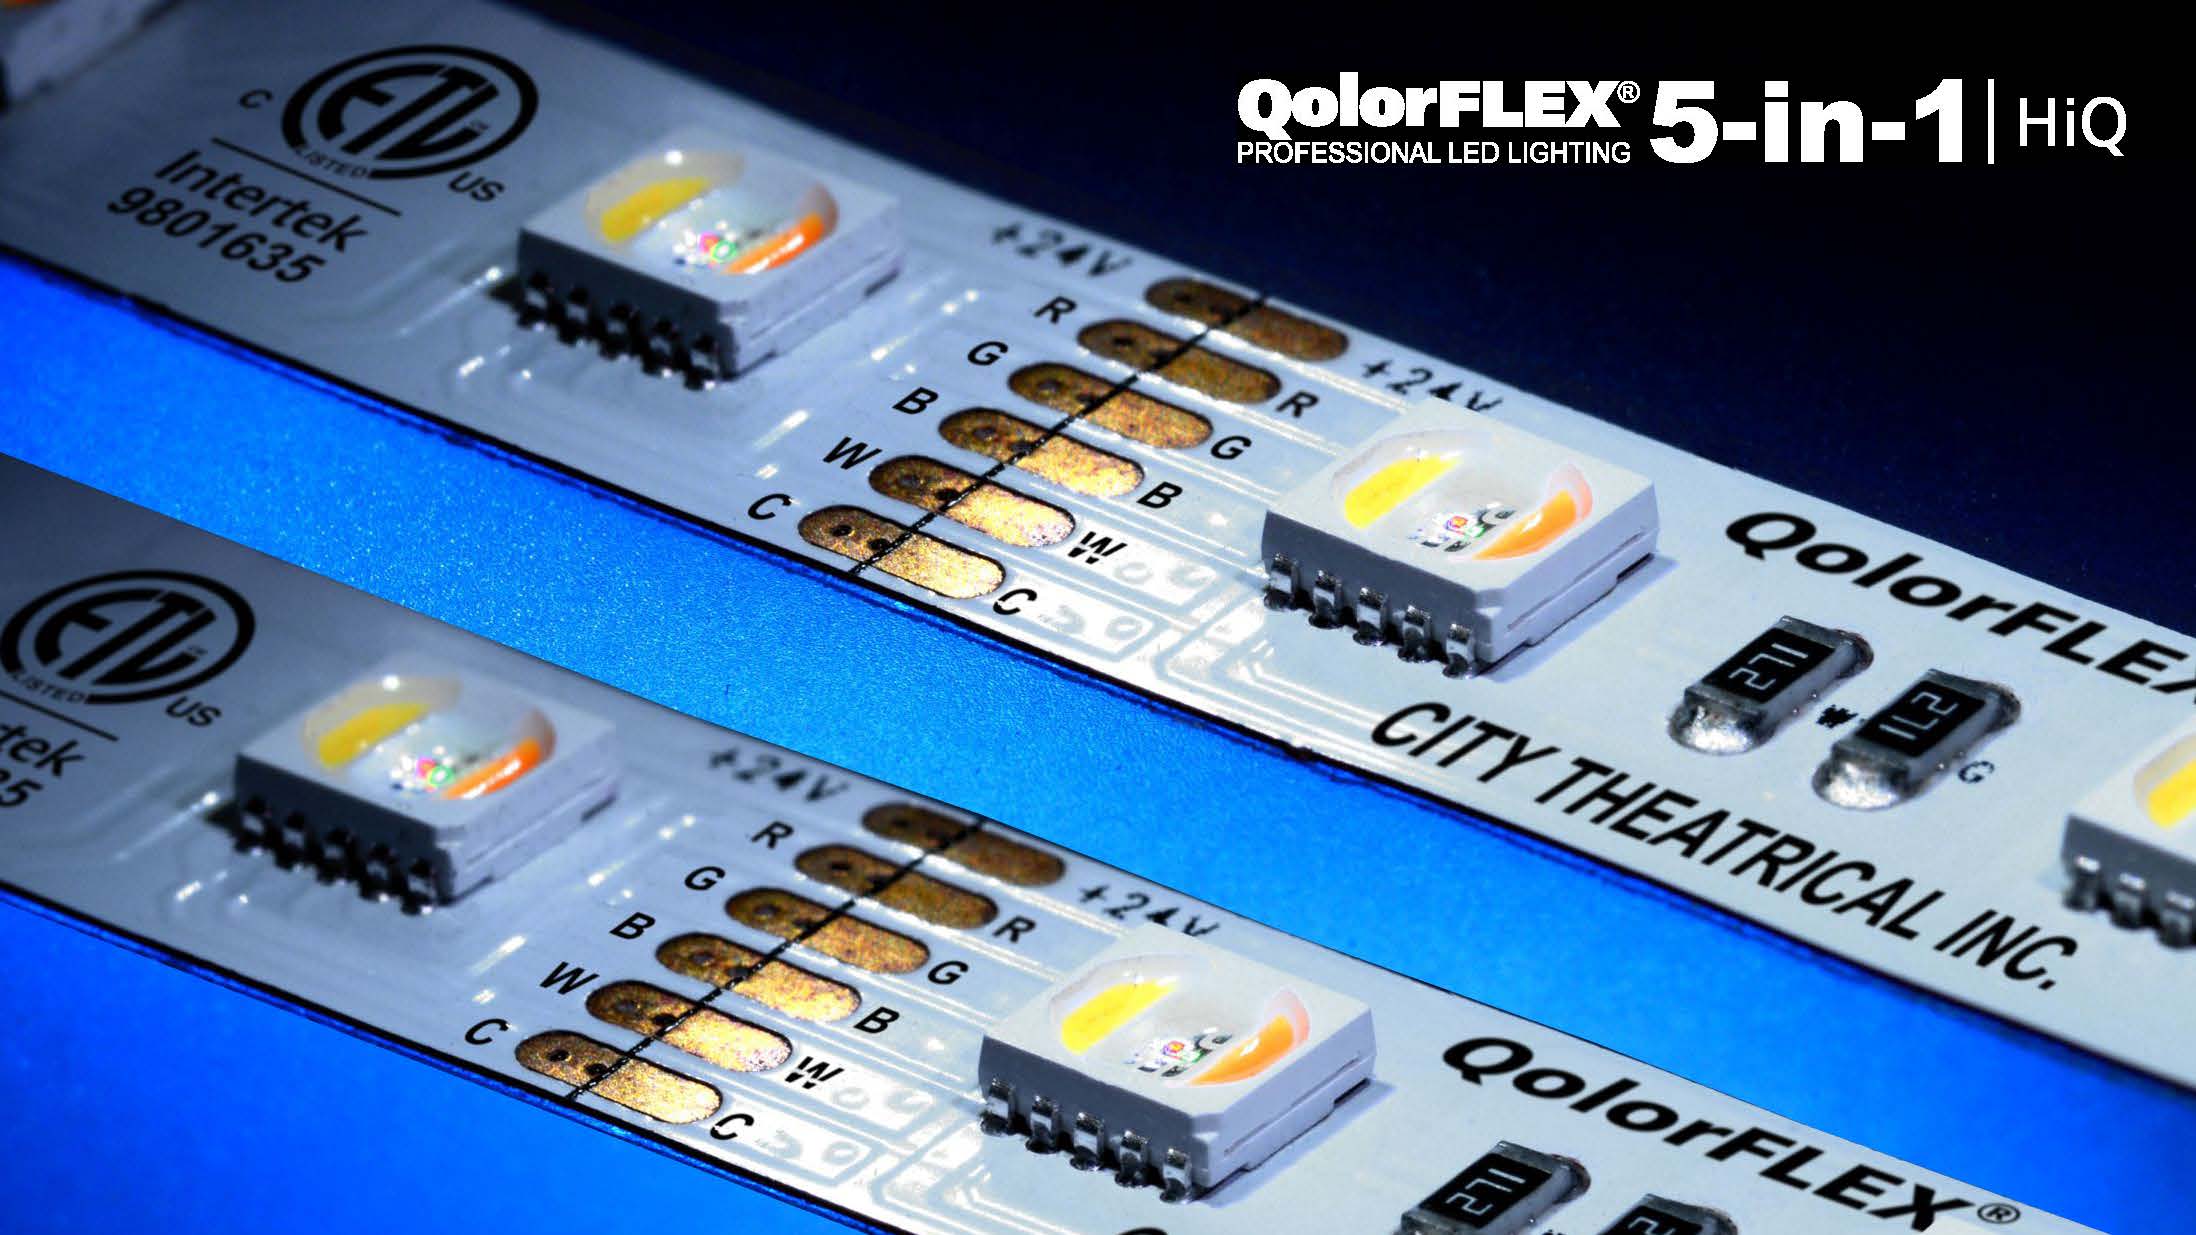 QolorFLEX 5-in-1 HiQ High CRI LED Tape